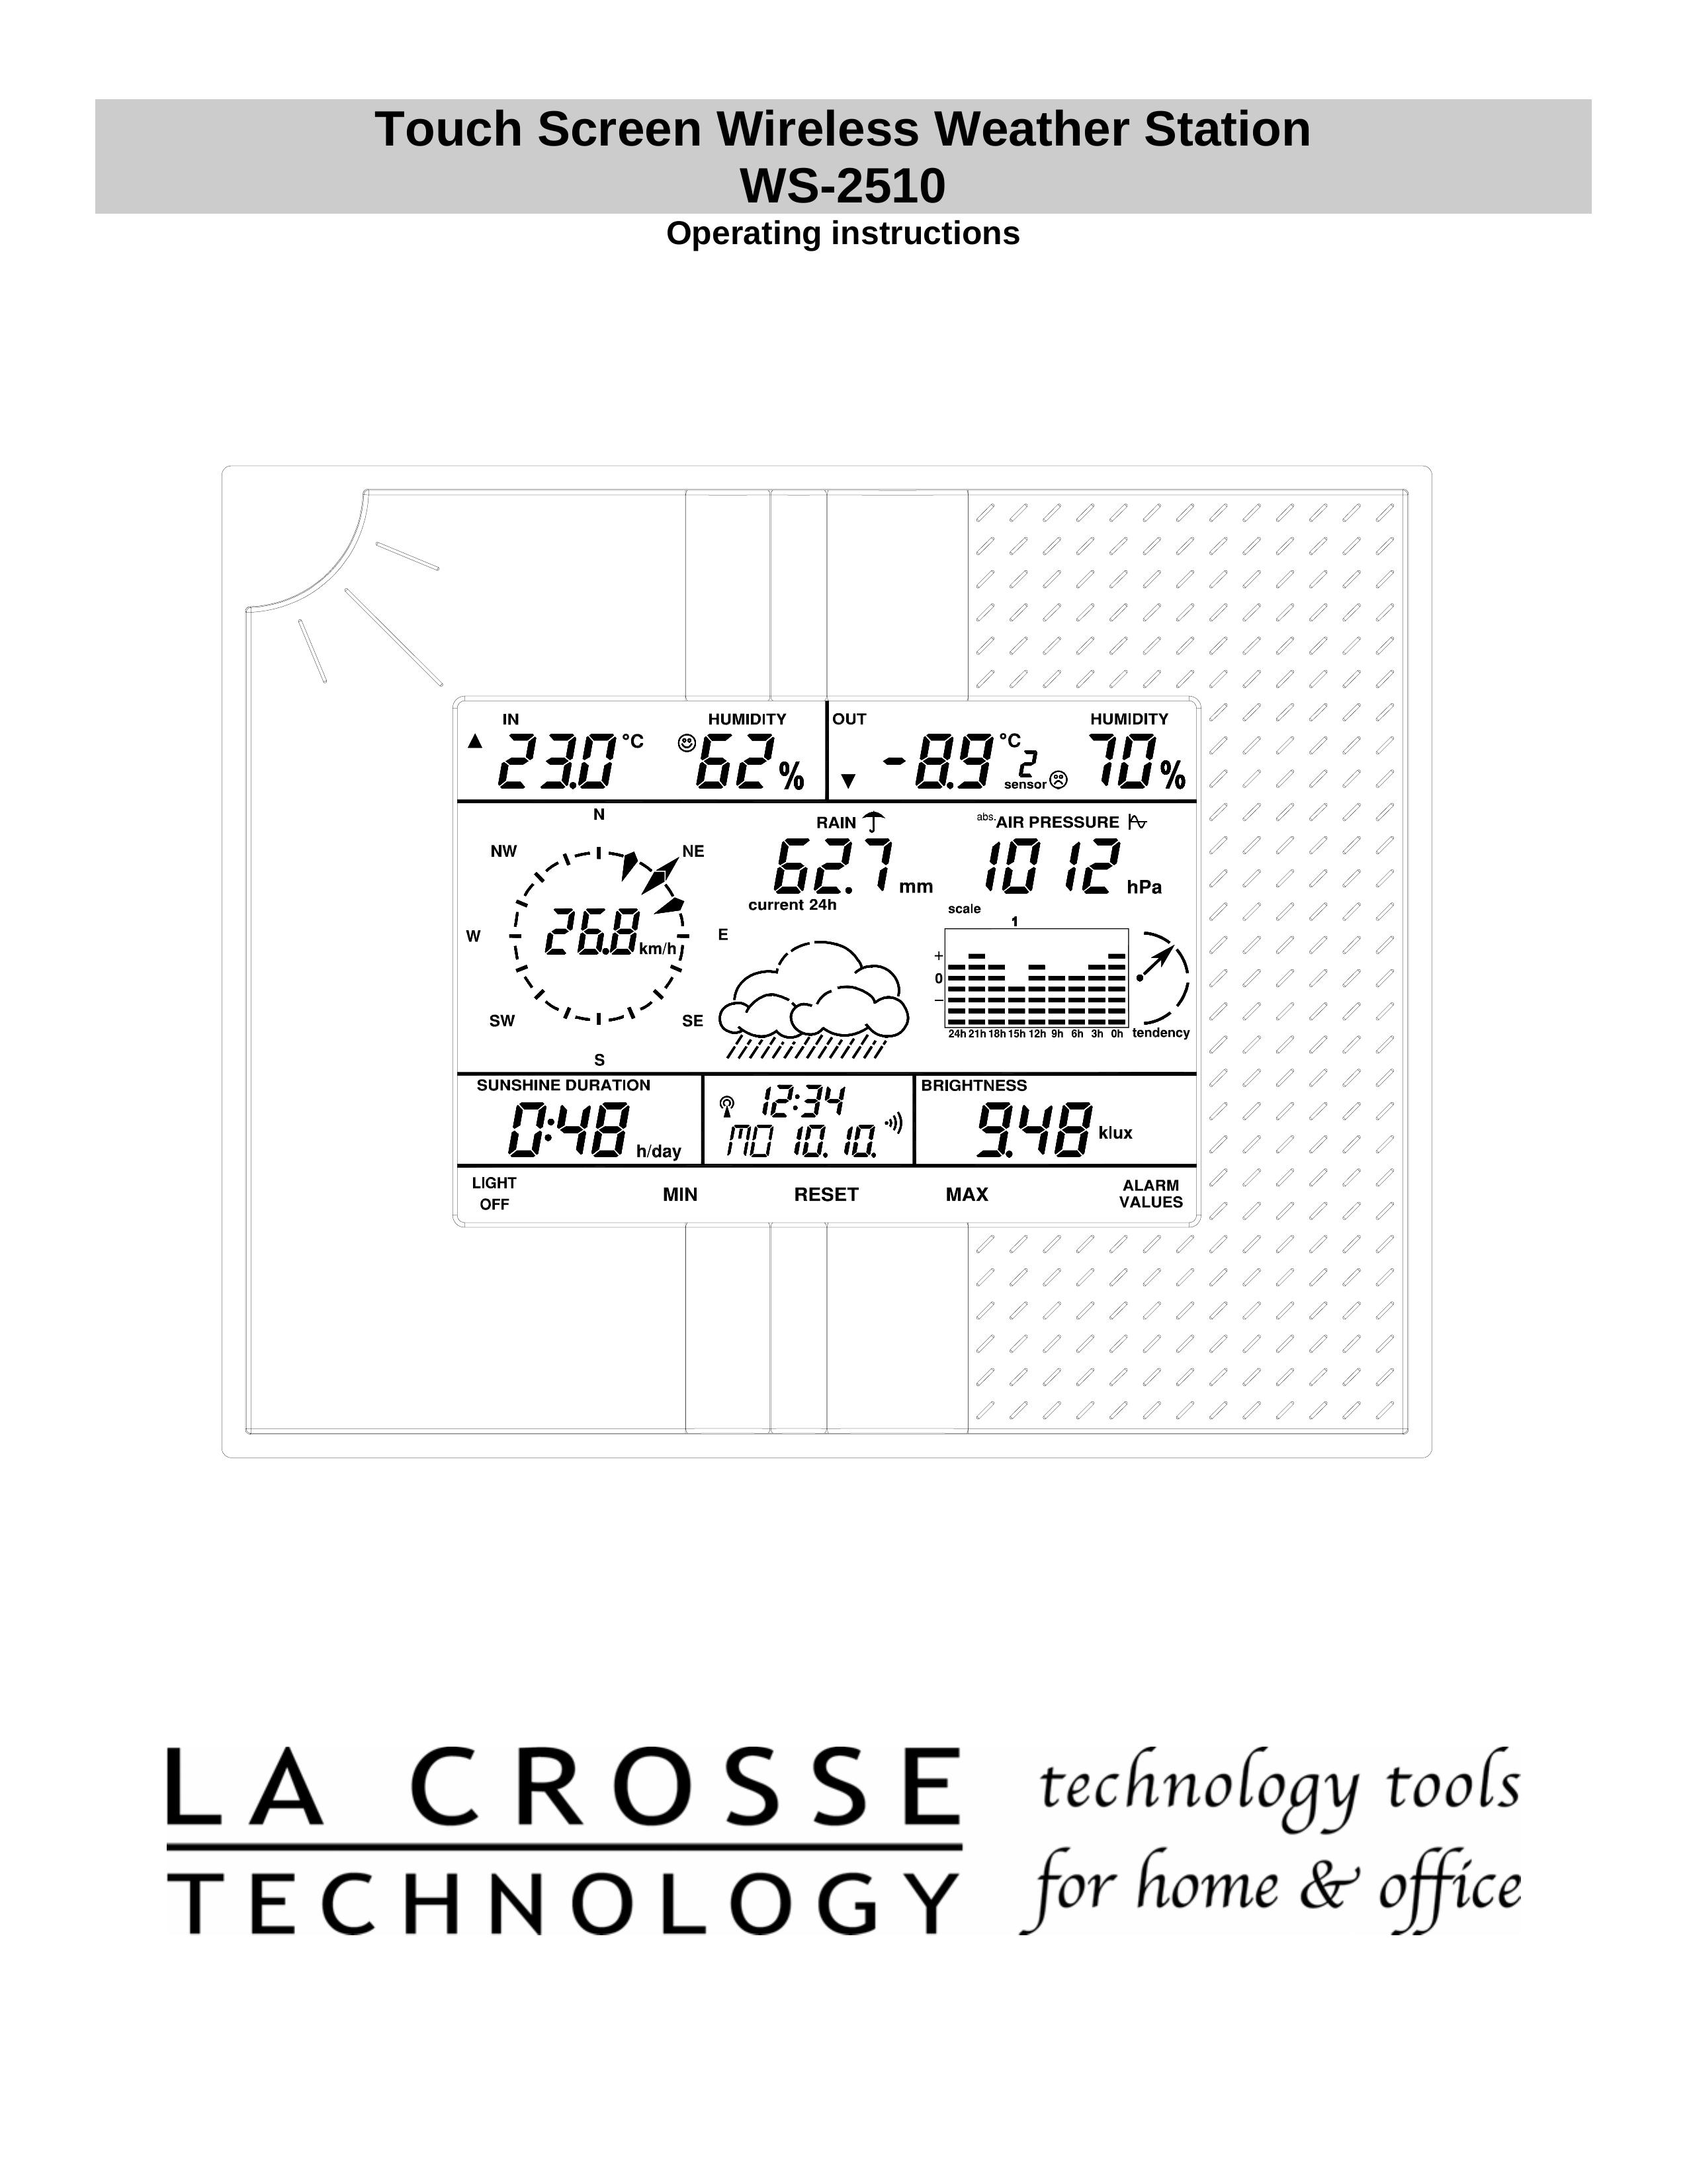 La Crosse Technology WS-2510 Weather Radio User Manual